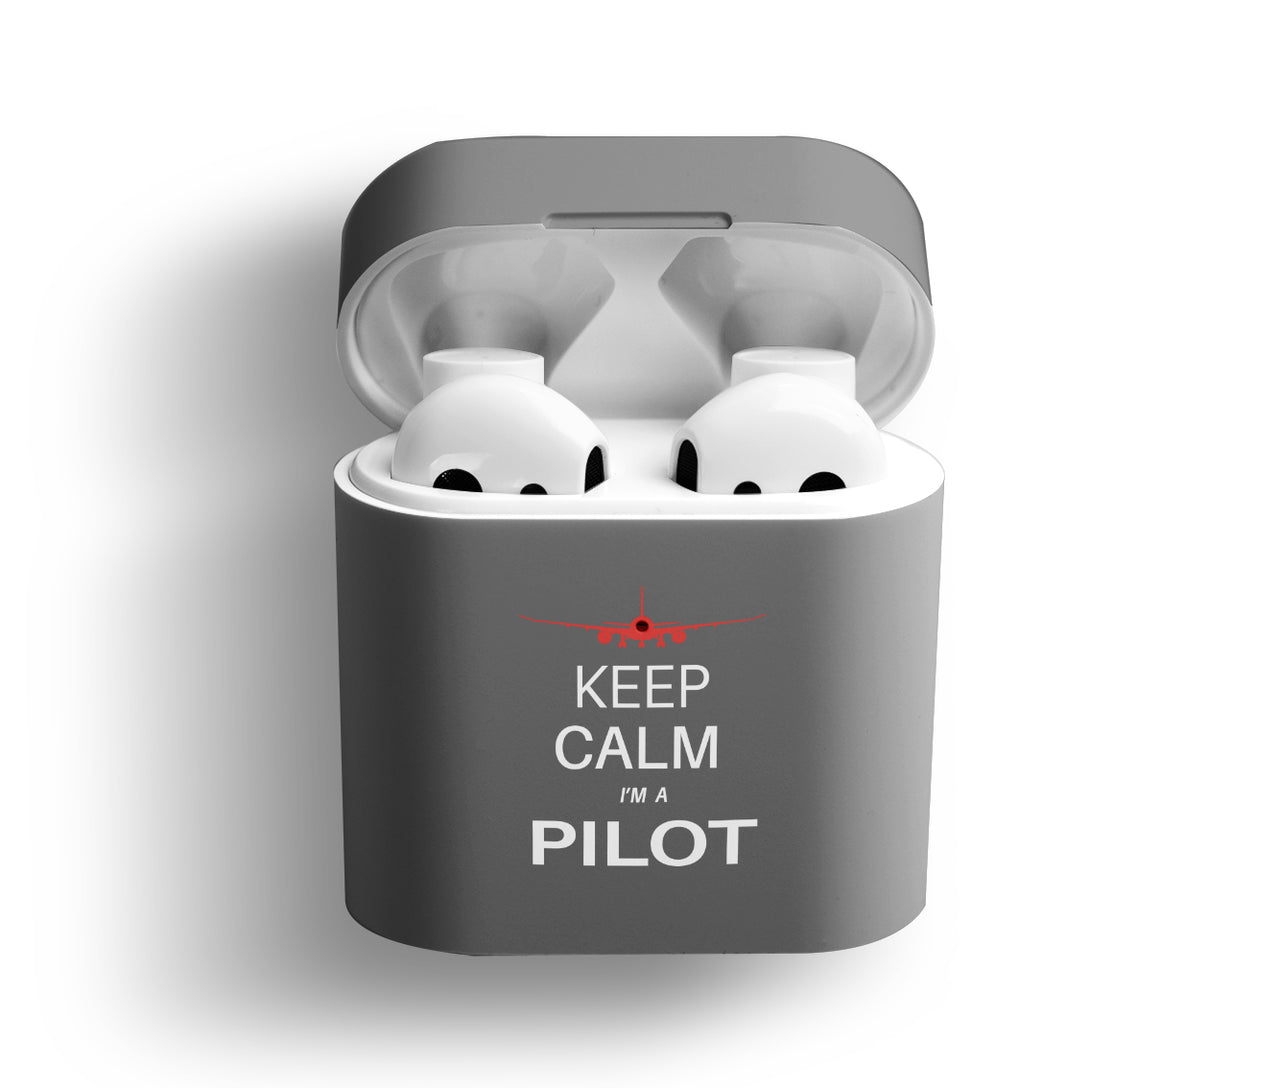 Pilot (777 Silhouette) Designed AirPods  Cases